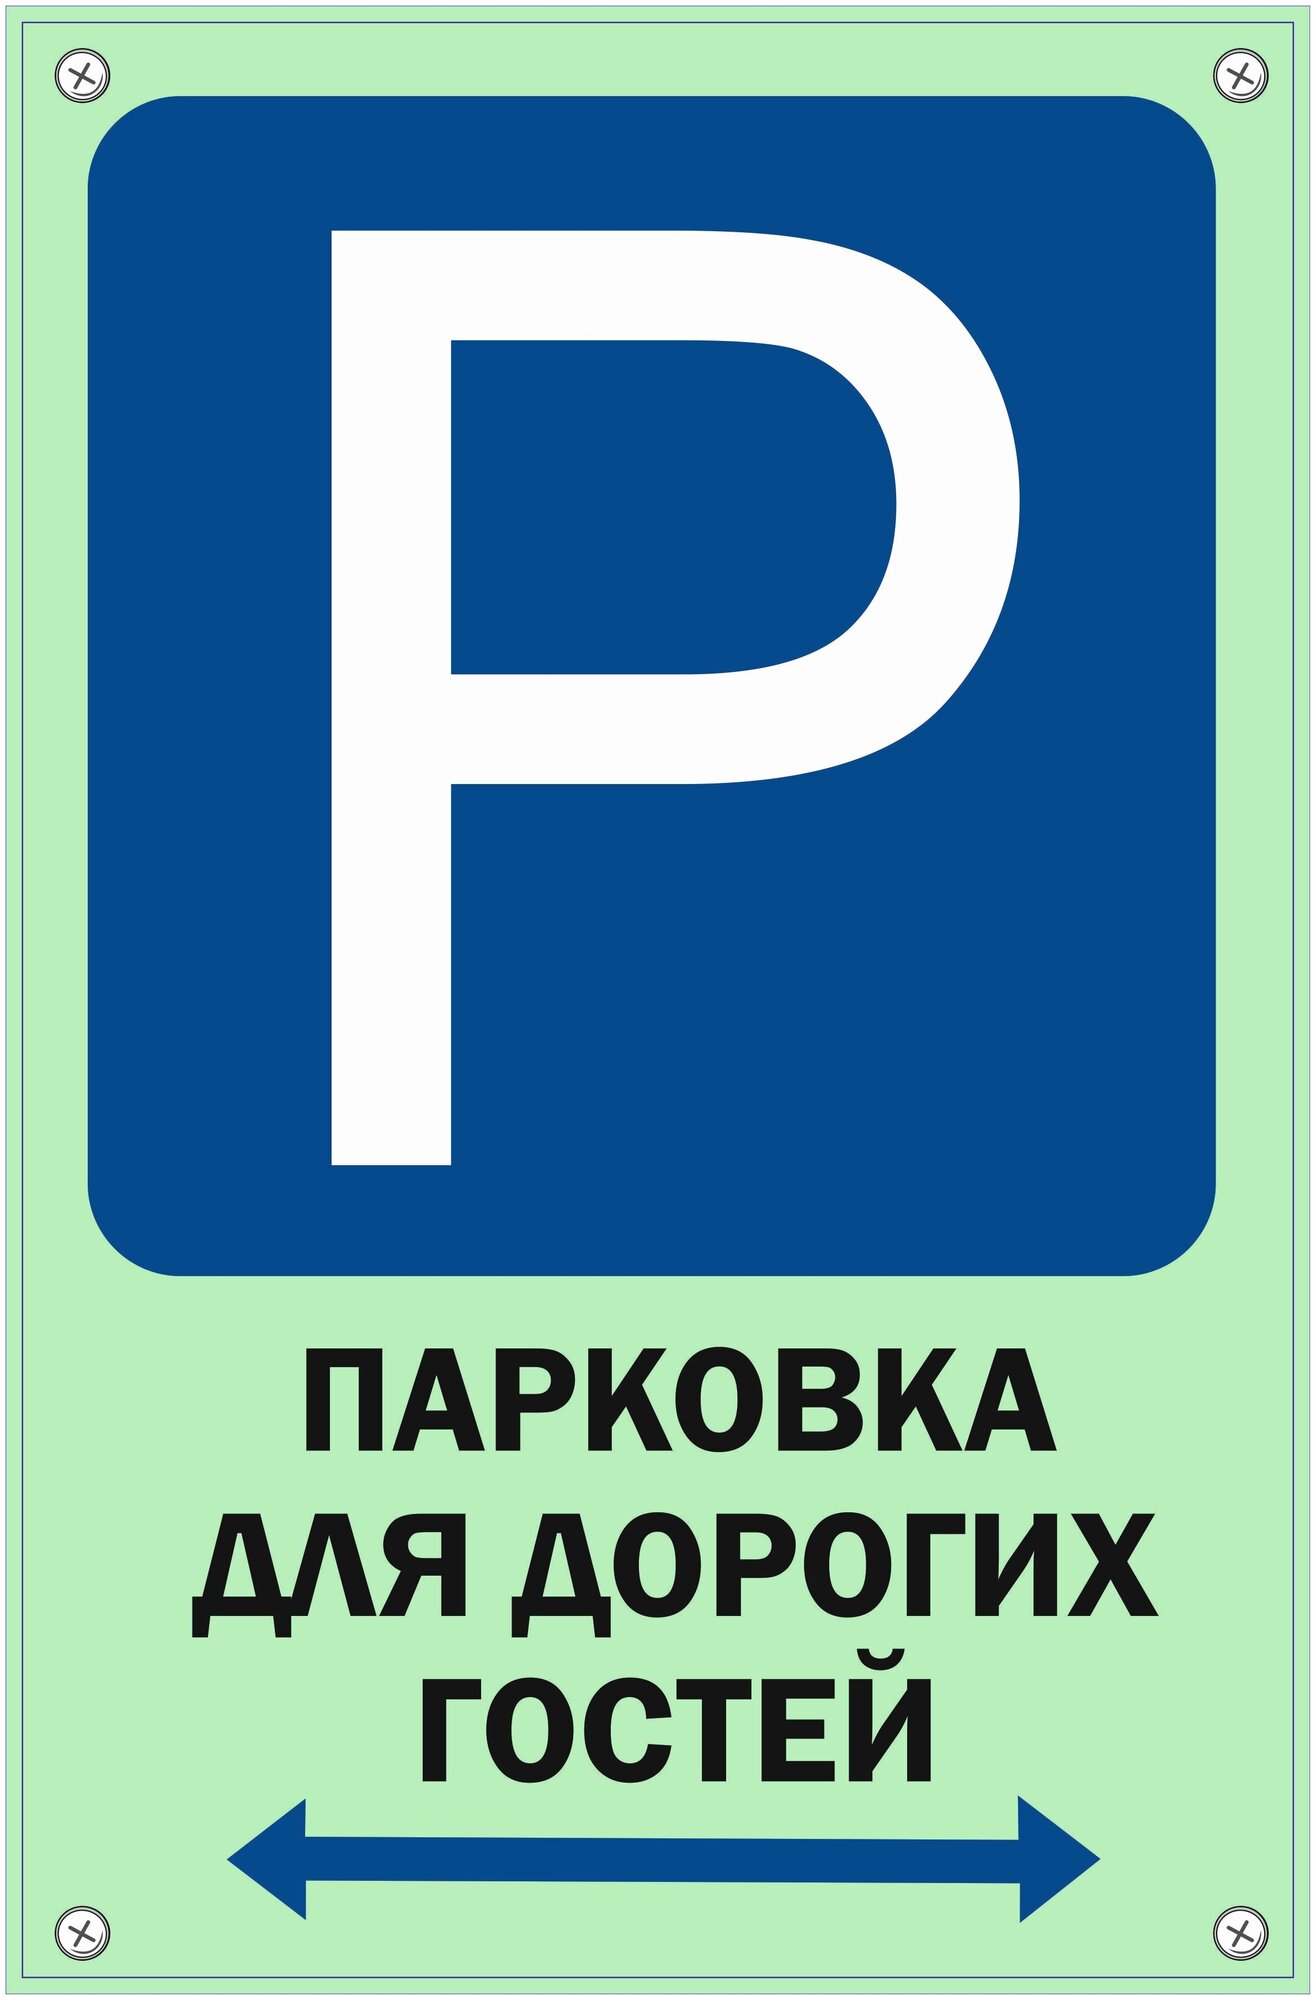 Табличка TPS 015 "Парковка гости" пластик 3 мм30*195 см